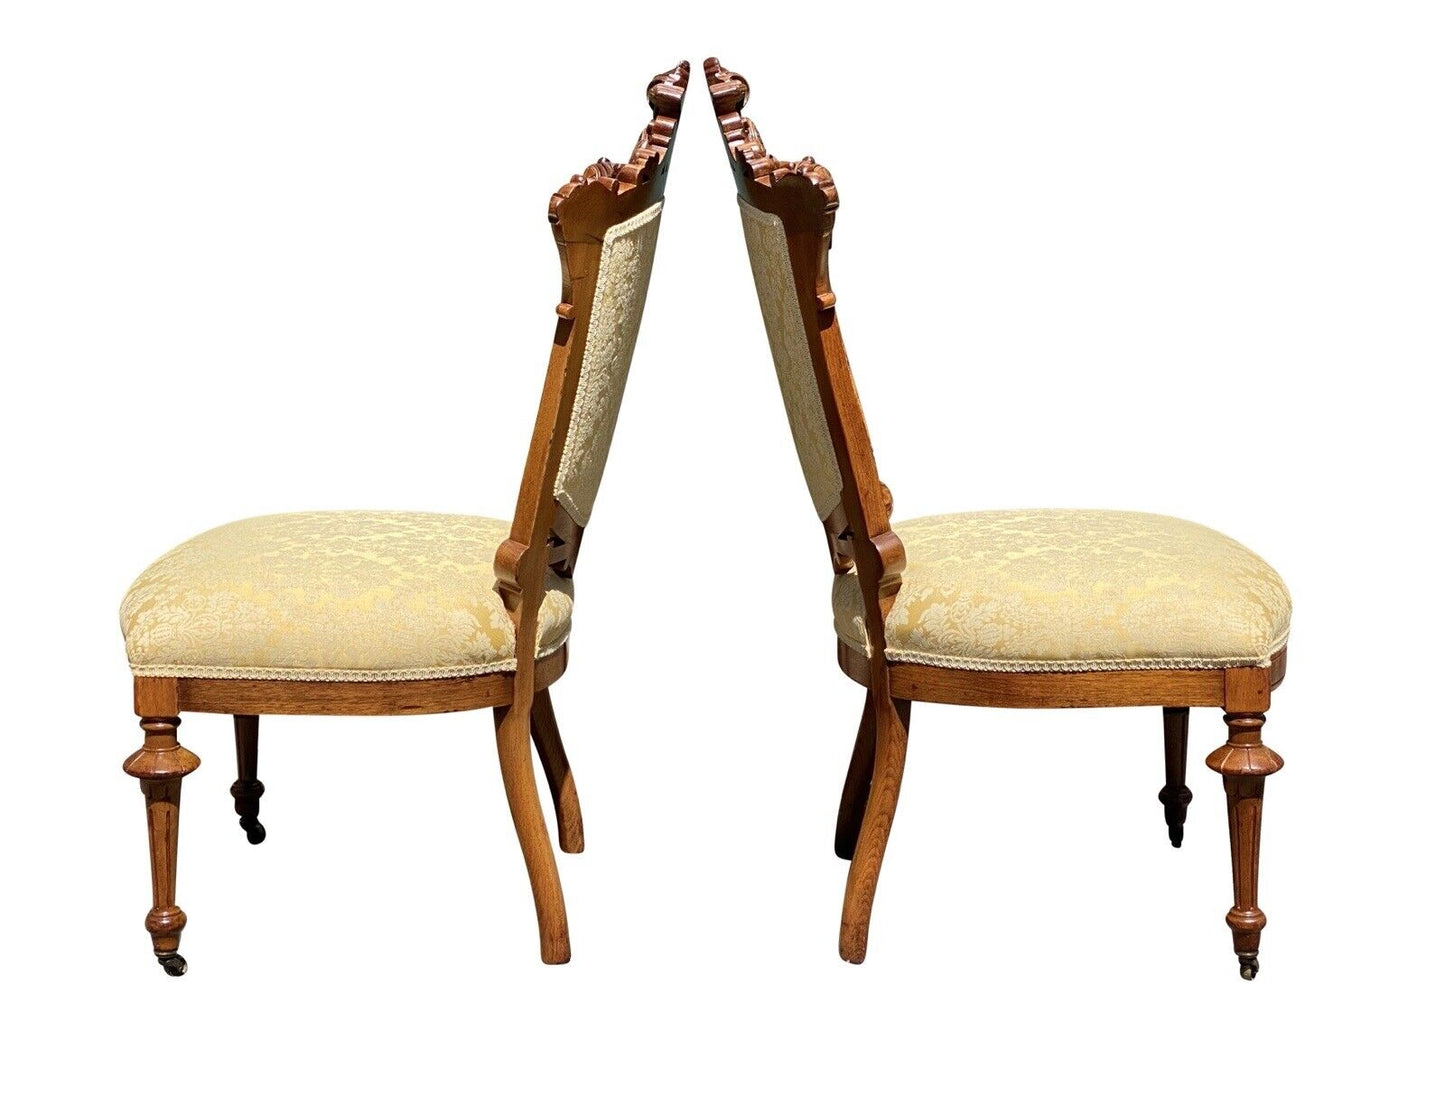 19th C Set of 4 Antique New York Victorian Renaissance Revival Parlor Chairs